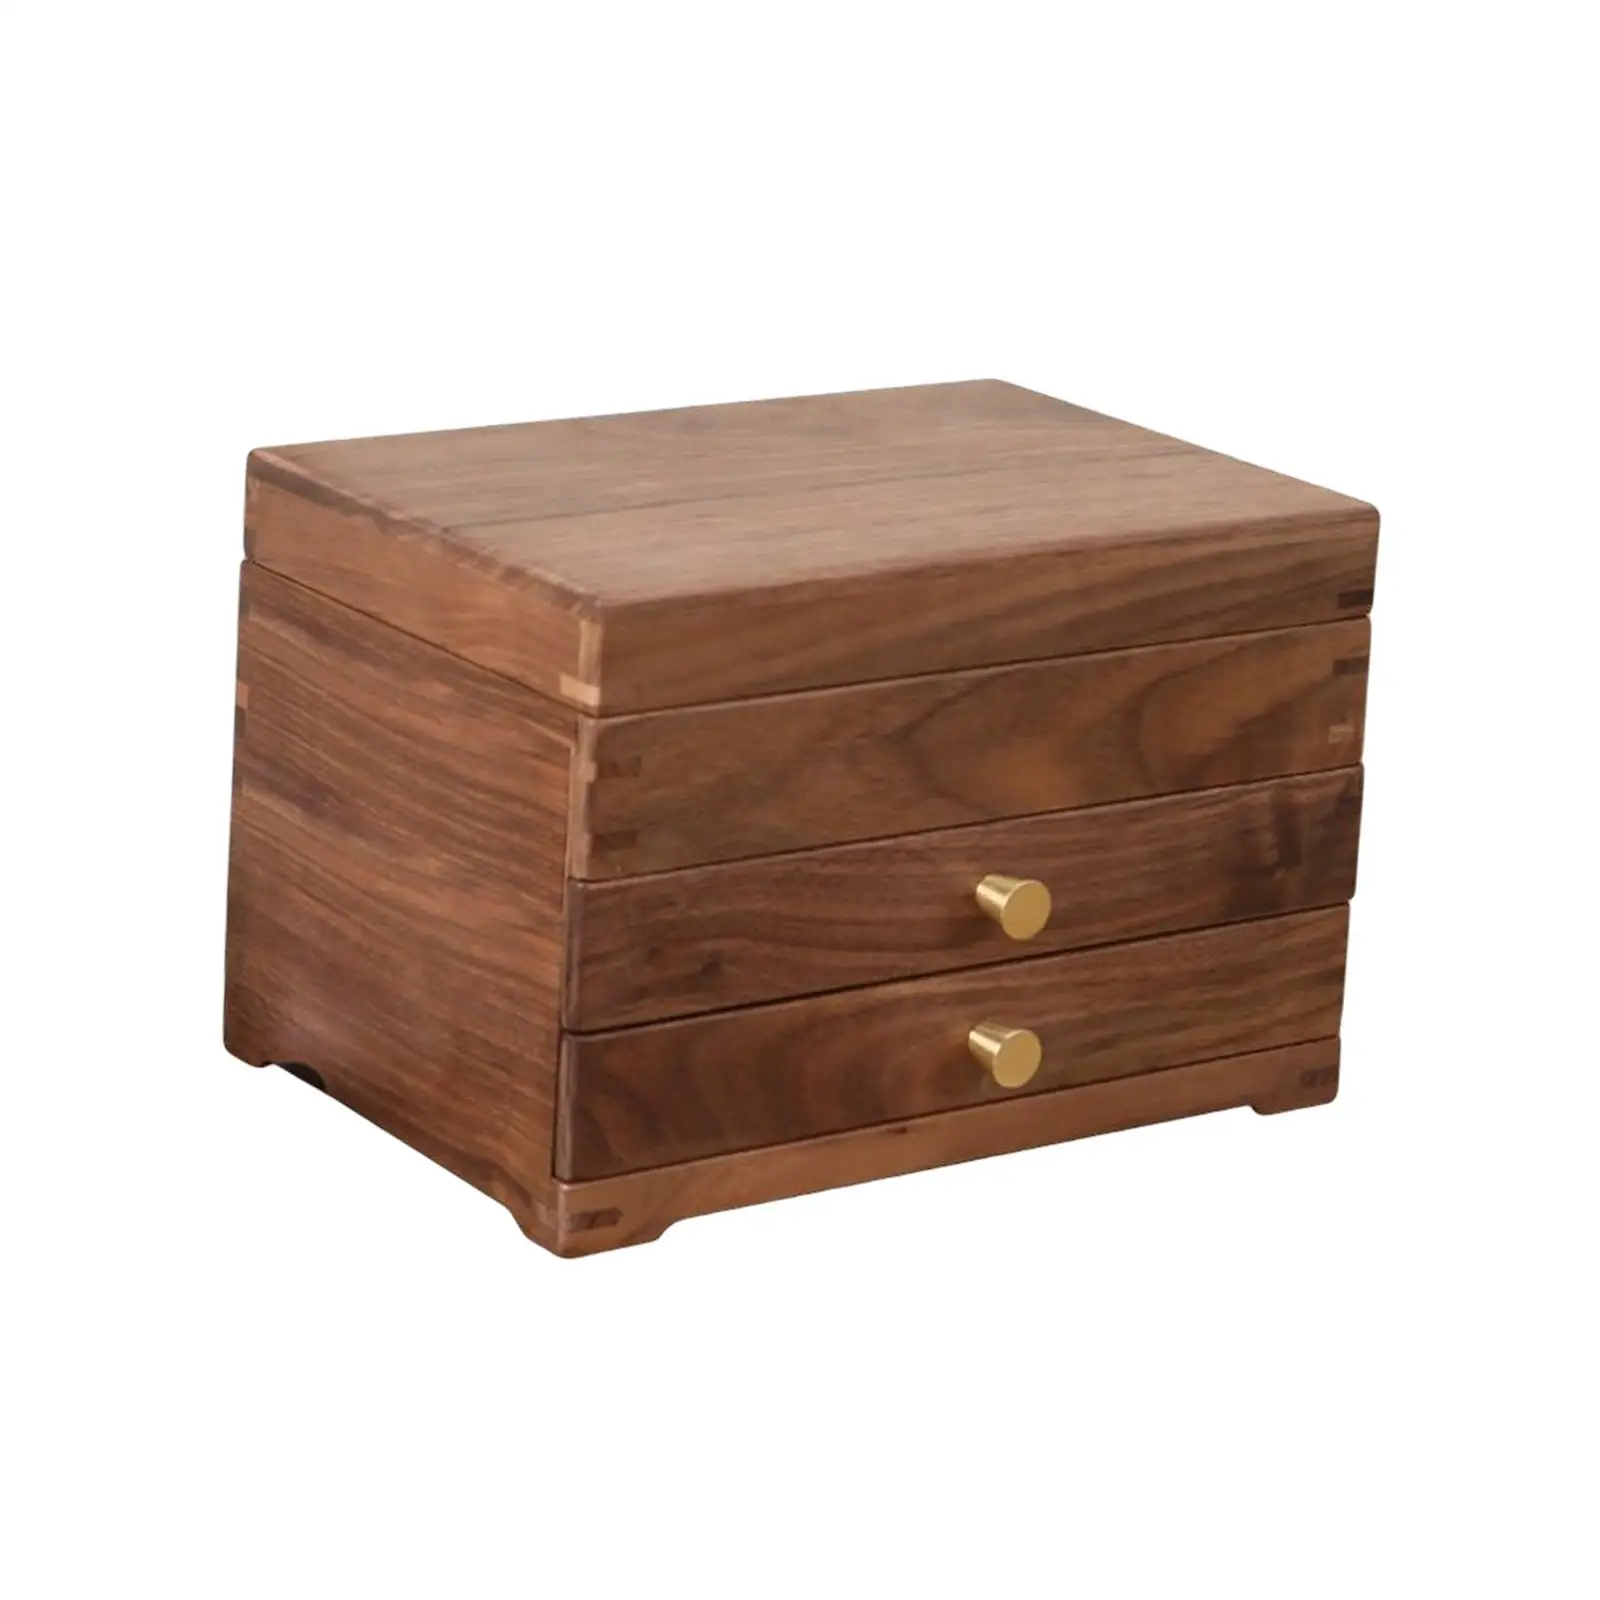 Wooden Jewelry Storage Box Protective Case Rings Holder Large Capacity keepsake box Layers for Keepsakes